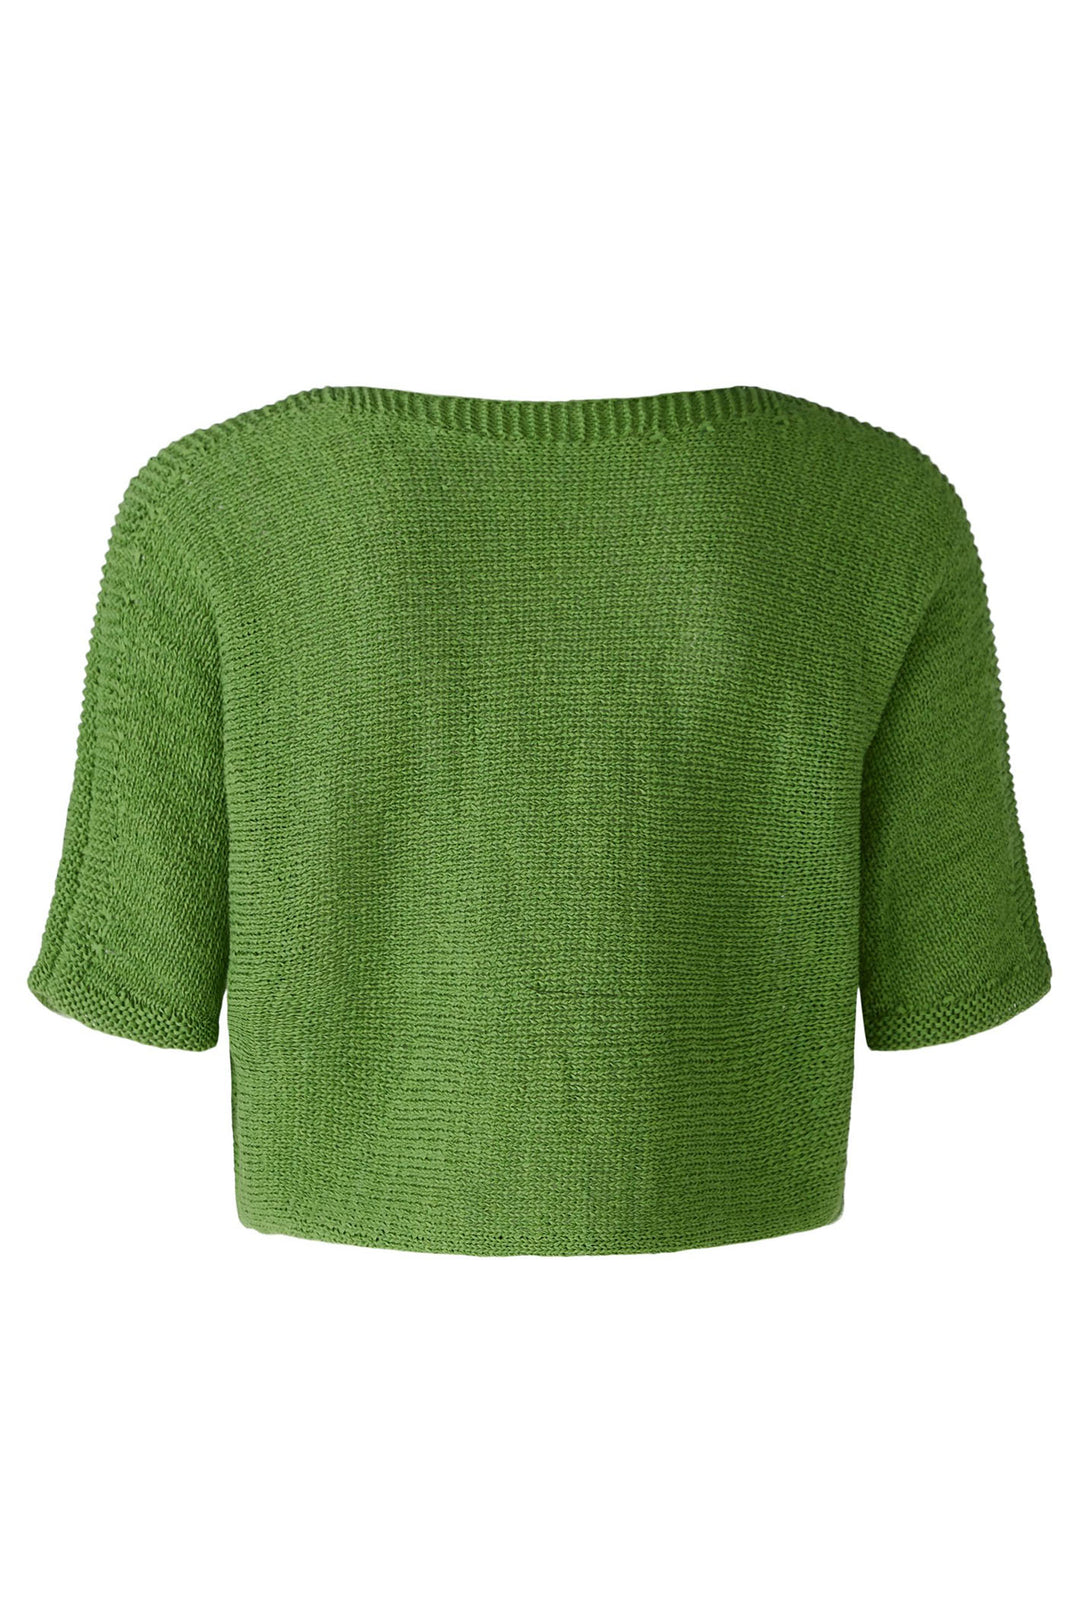 Oui 88480 Green Crop Ribbed Detail Jumper - Olivia Grace Fashion